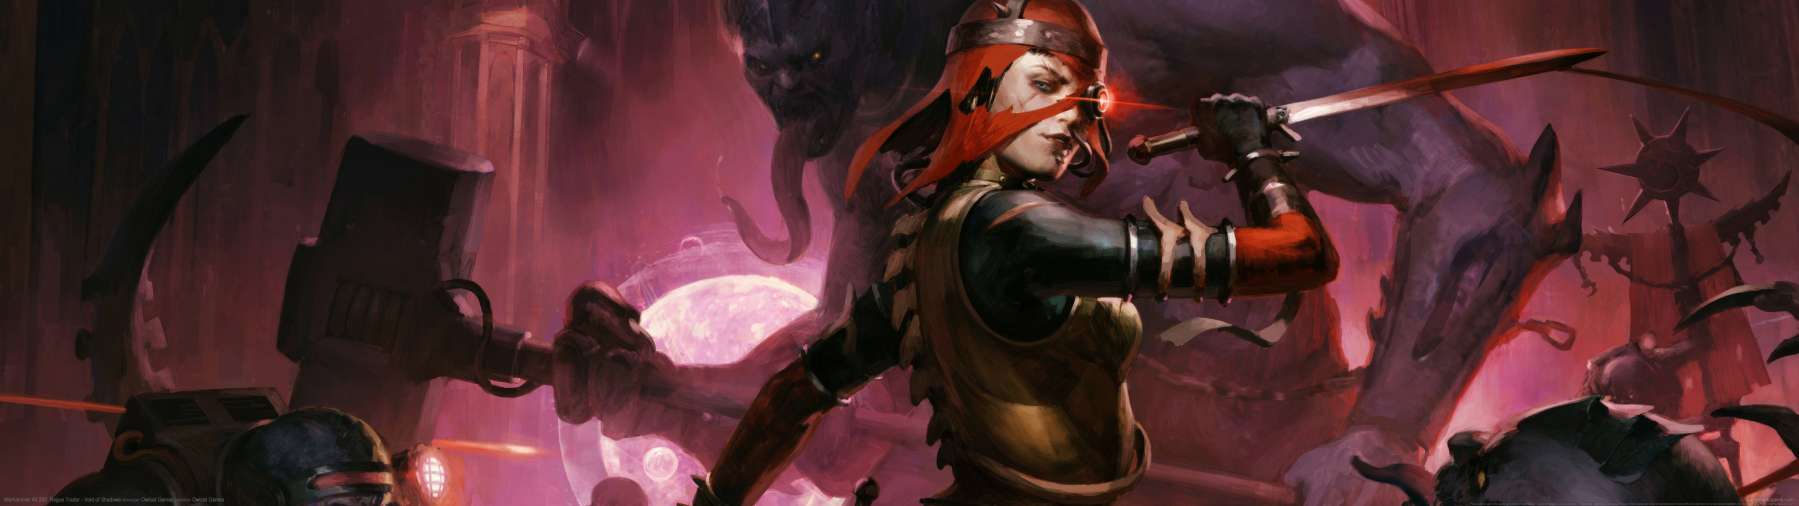 Warhammer 40,000: Rogue Trader - Void of Shadows superwide fond d'cran 01